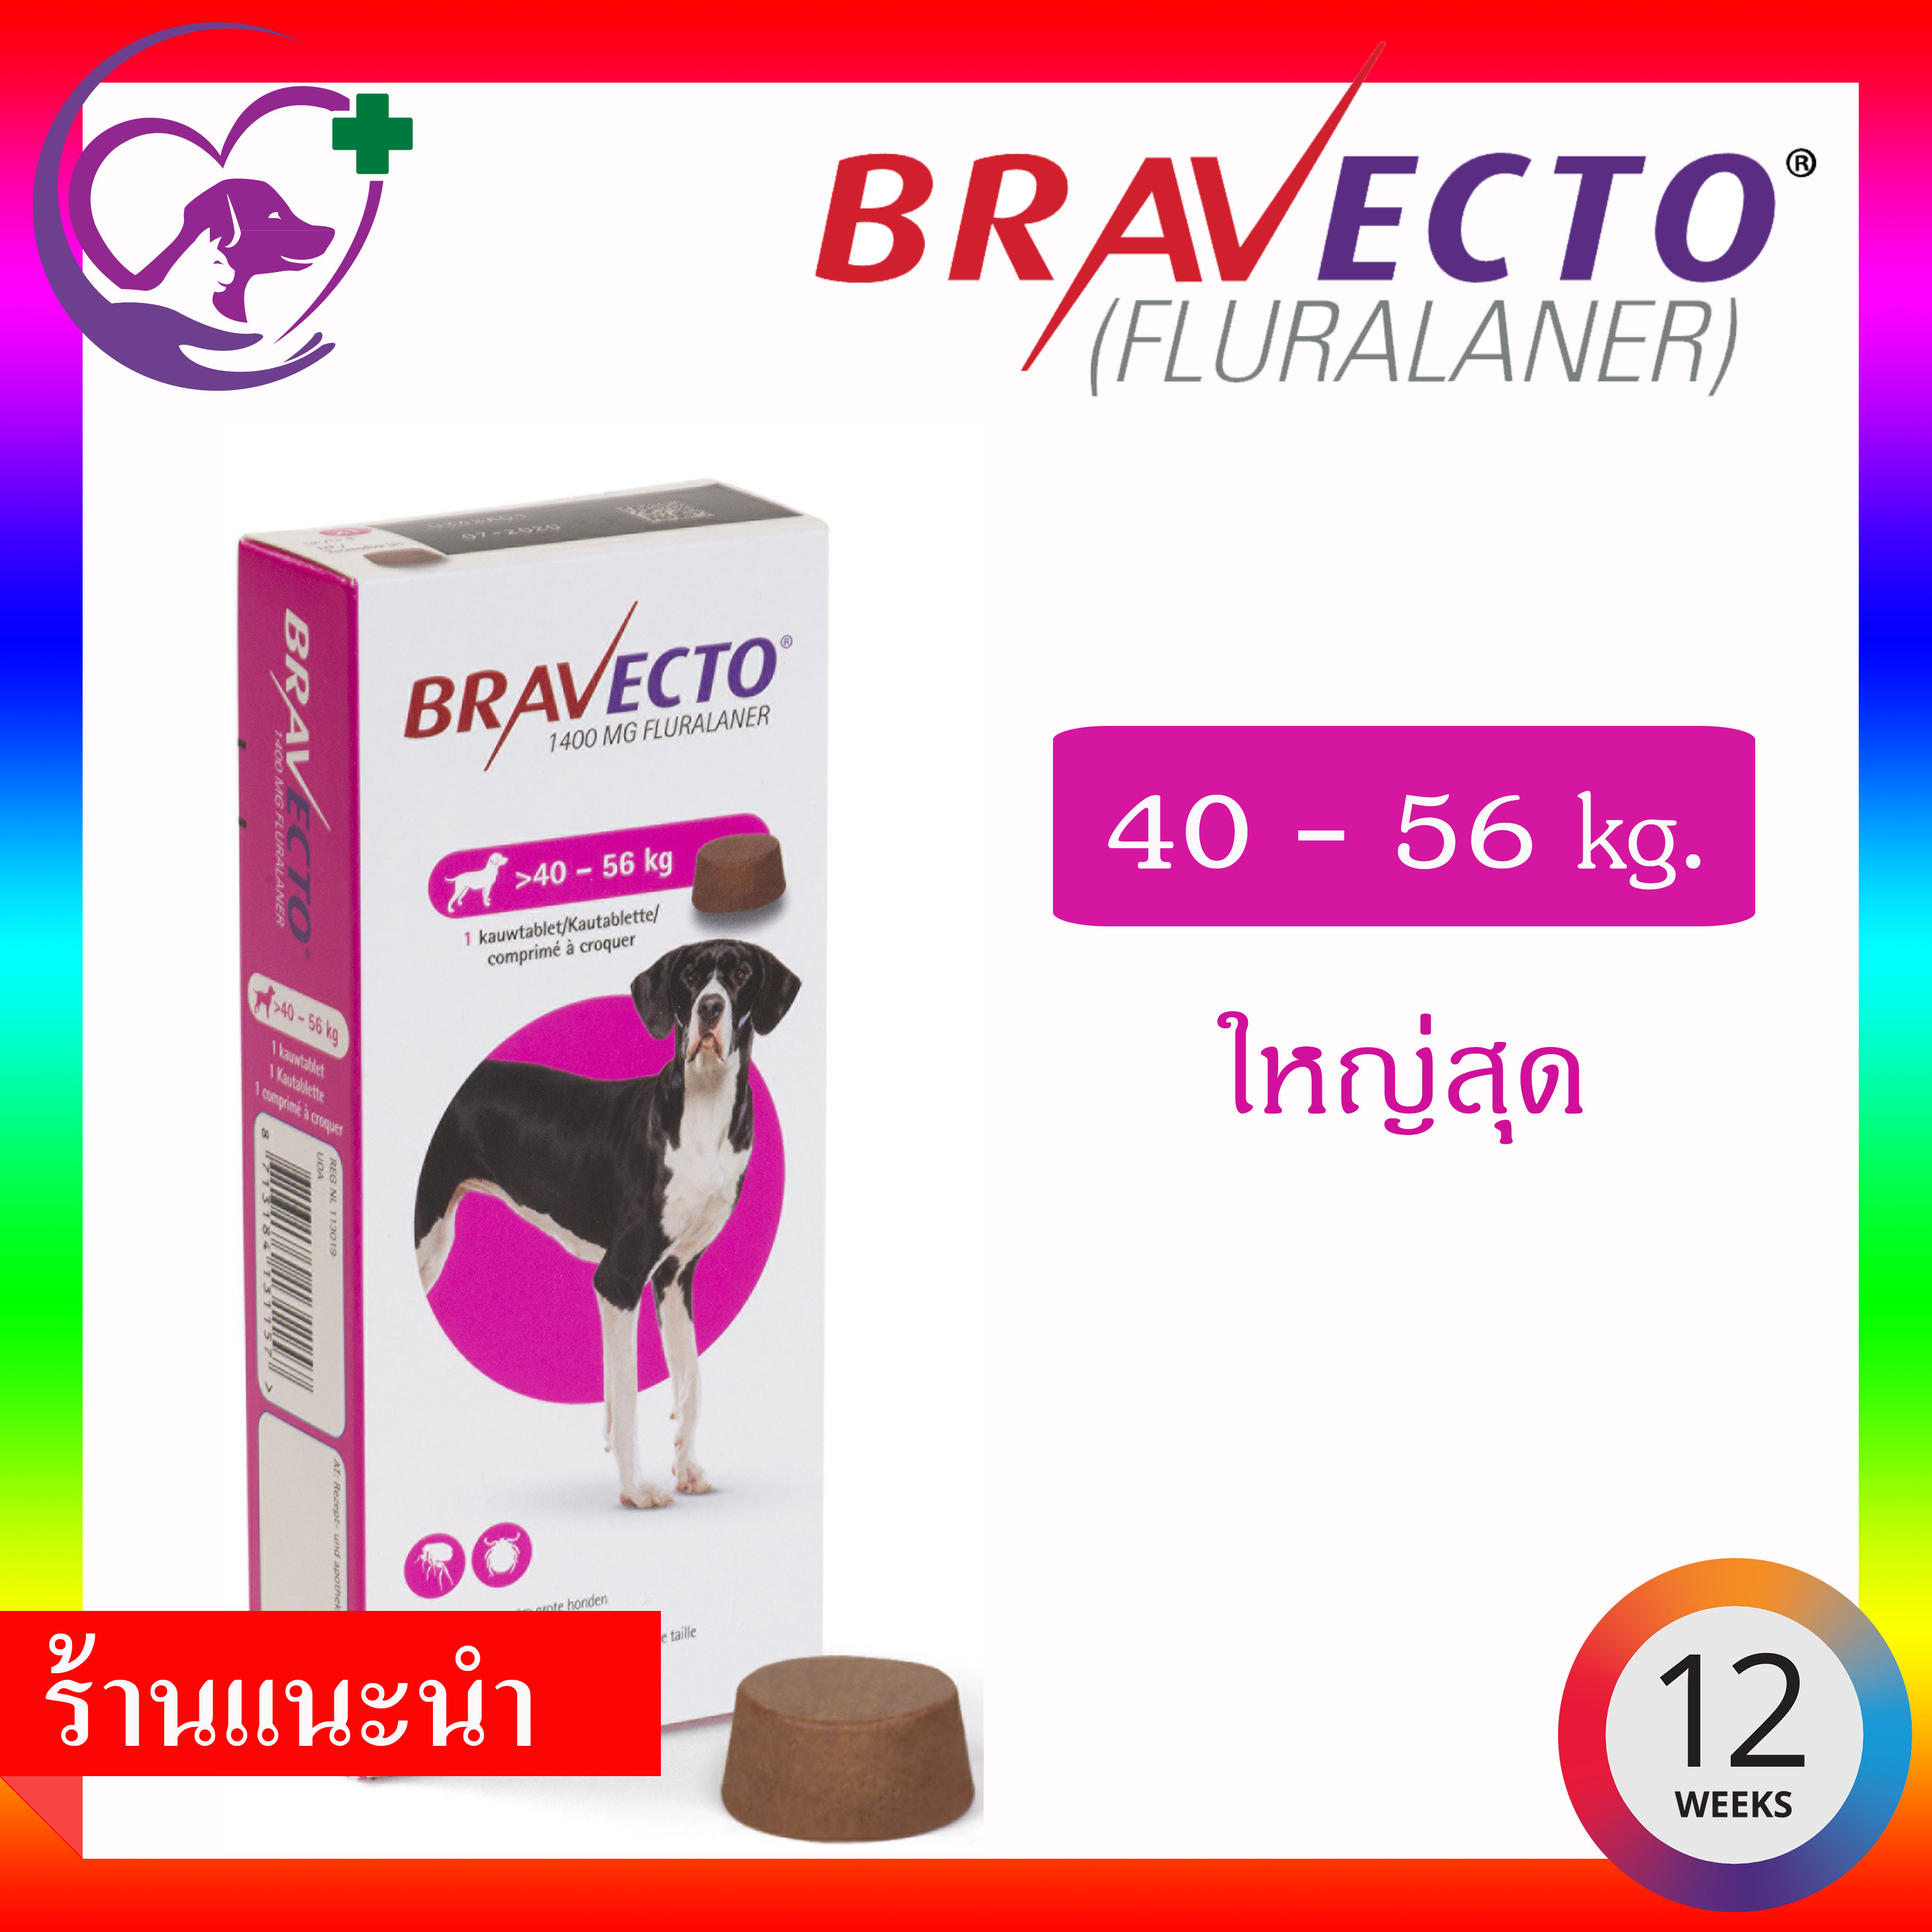 Bravectoบราเวคโต สำหรับสุนัข 40 - 56 kg. ป้องกัน 12 สัปดาห์ (3 เดือน)